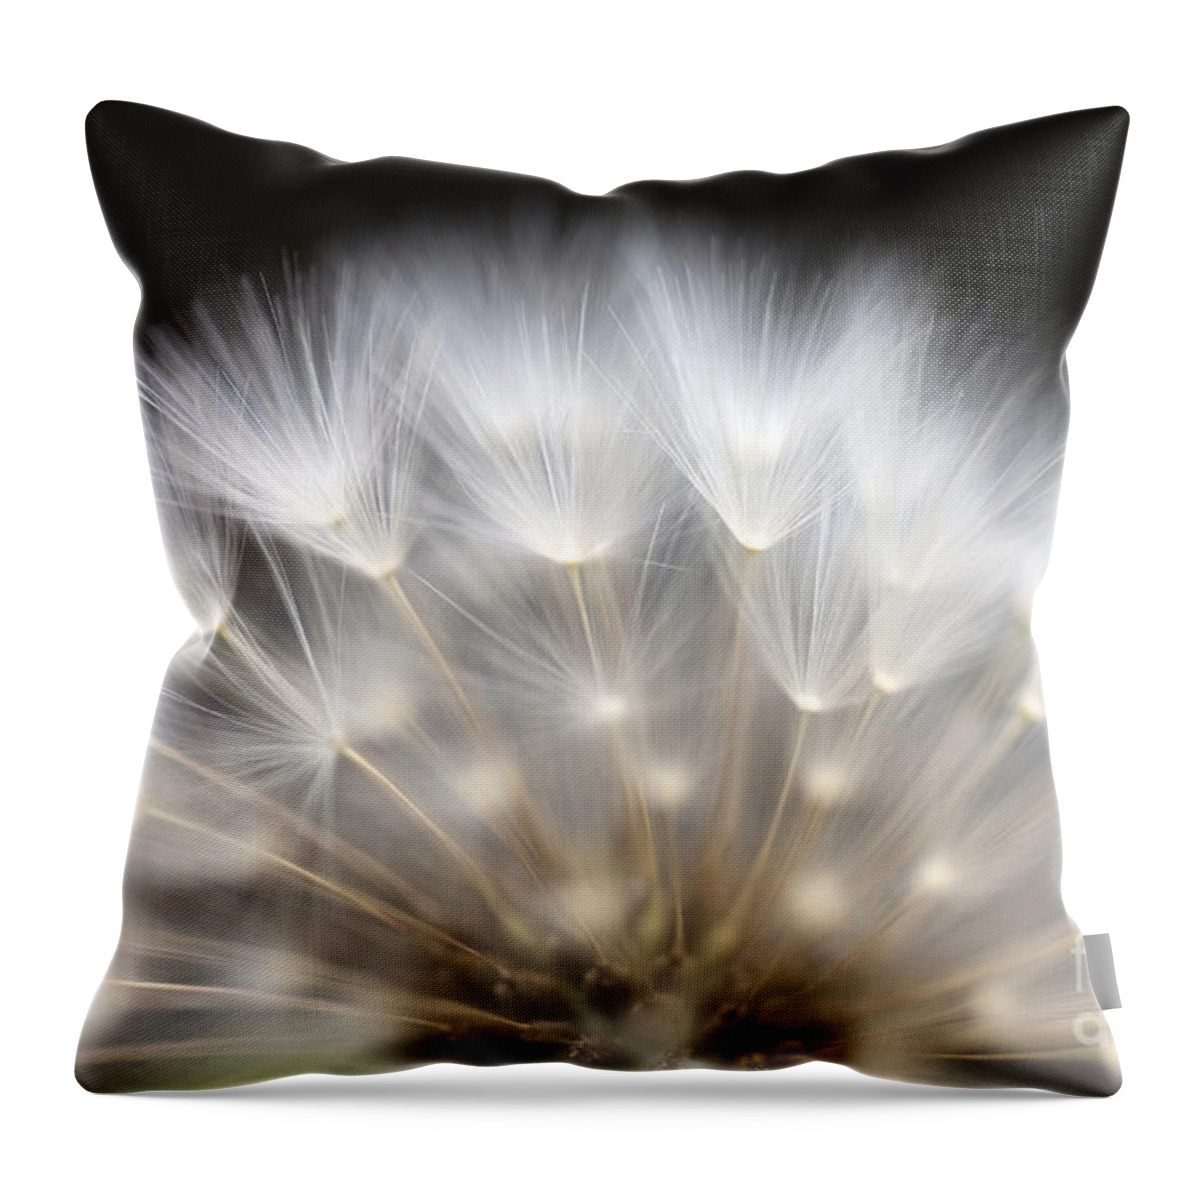 Dandelion Throw Pillow featuring the photograph Dandelion #1 by Jim Corwin